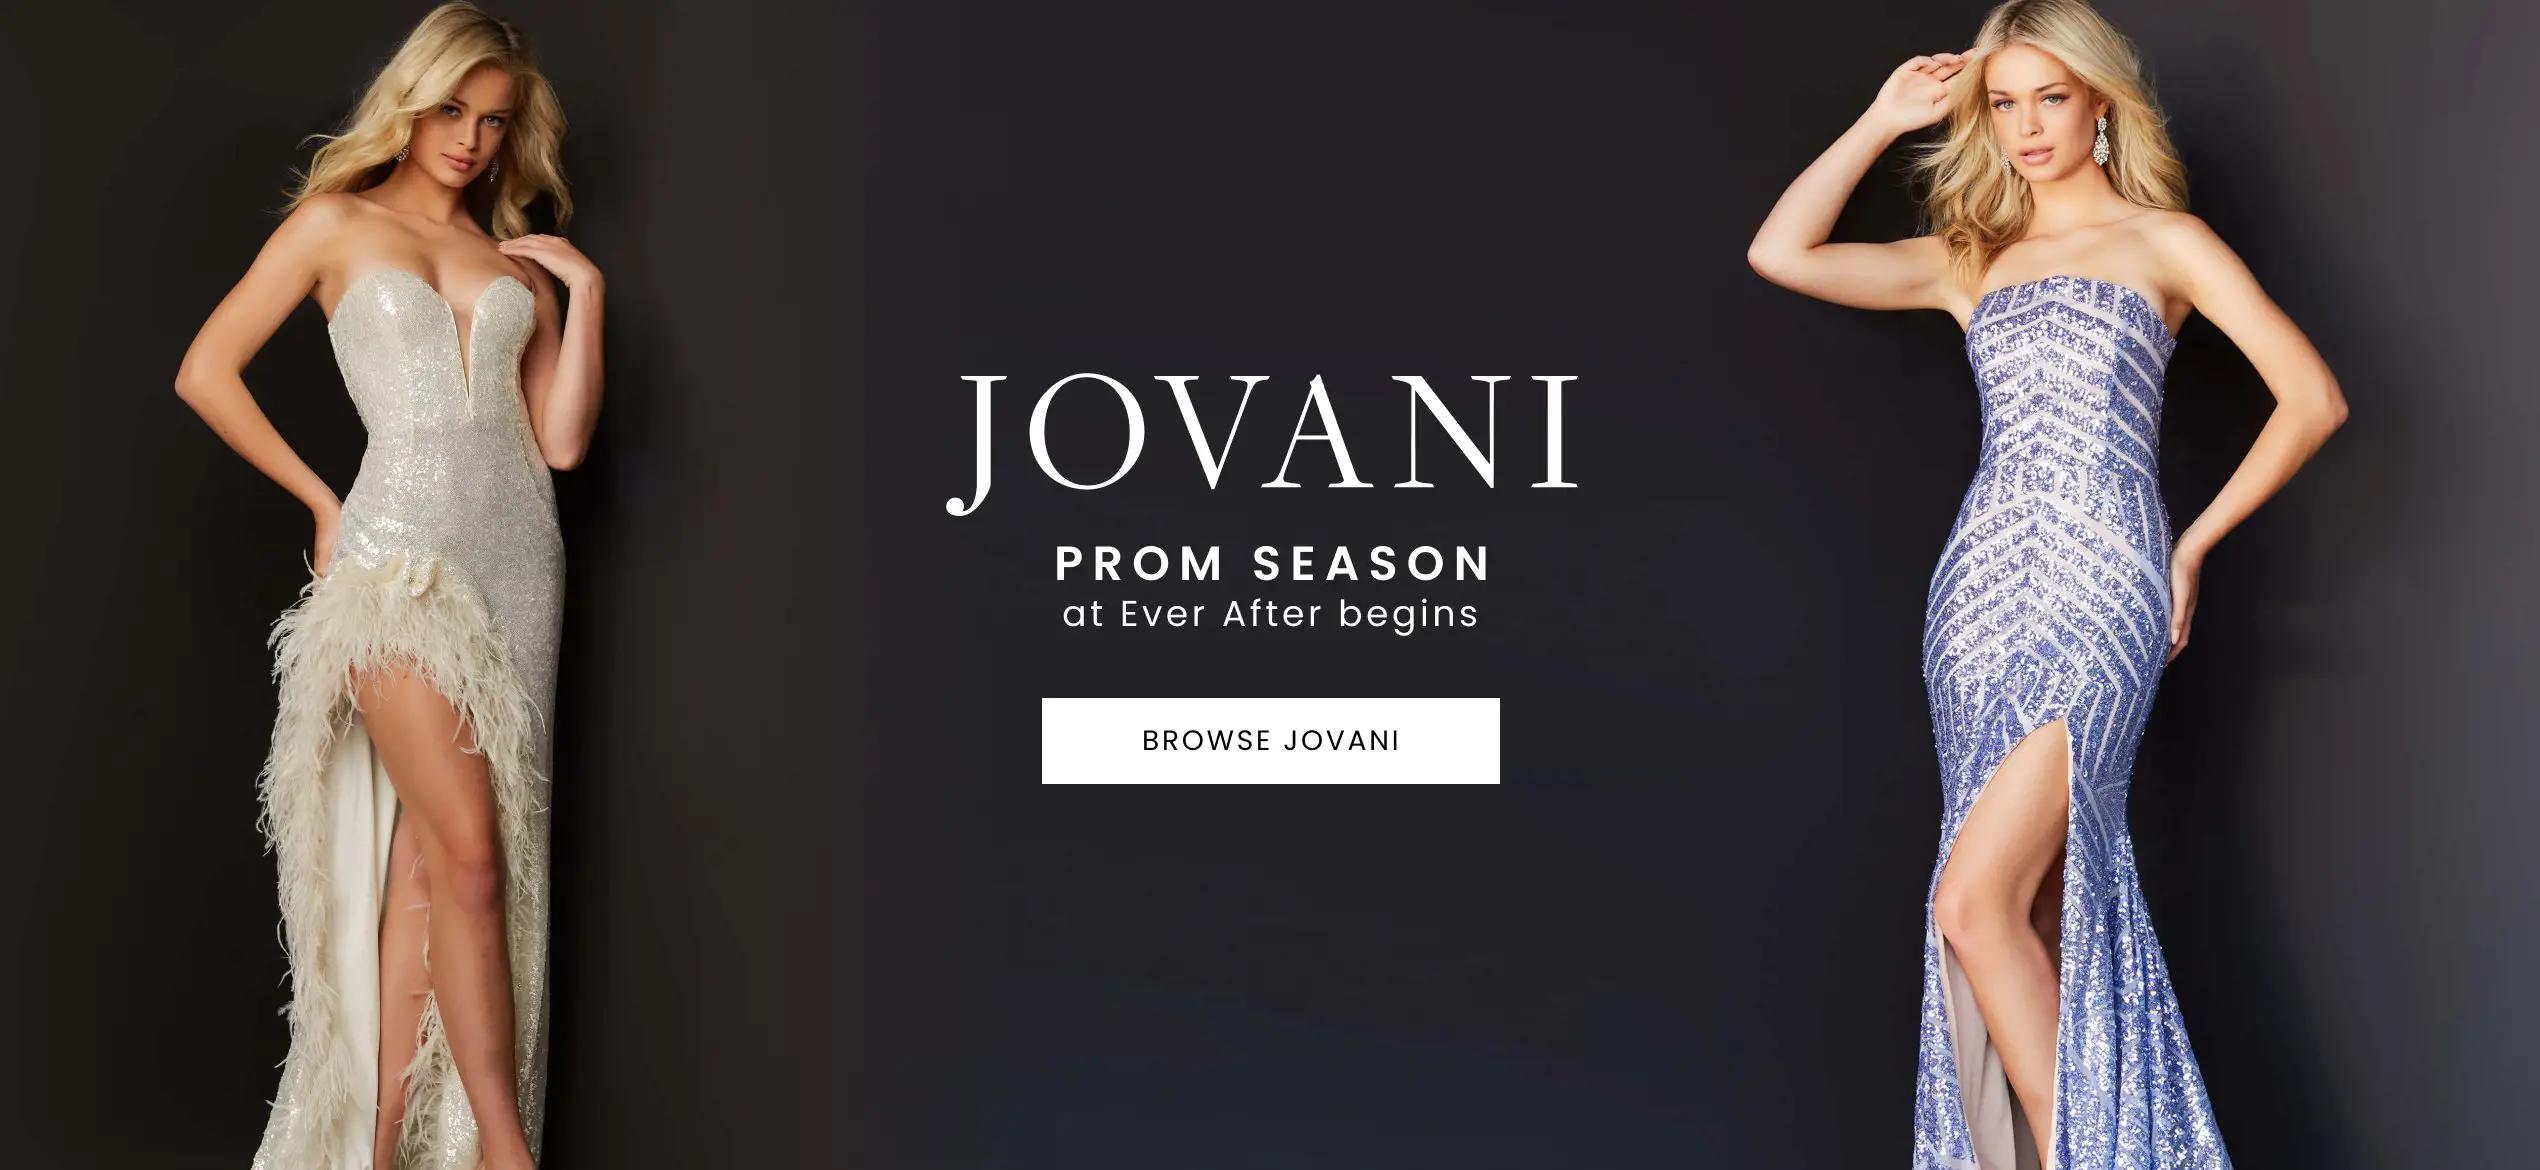 Prom Jovani Desktop Banner